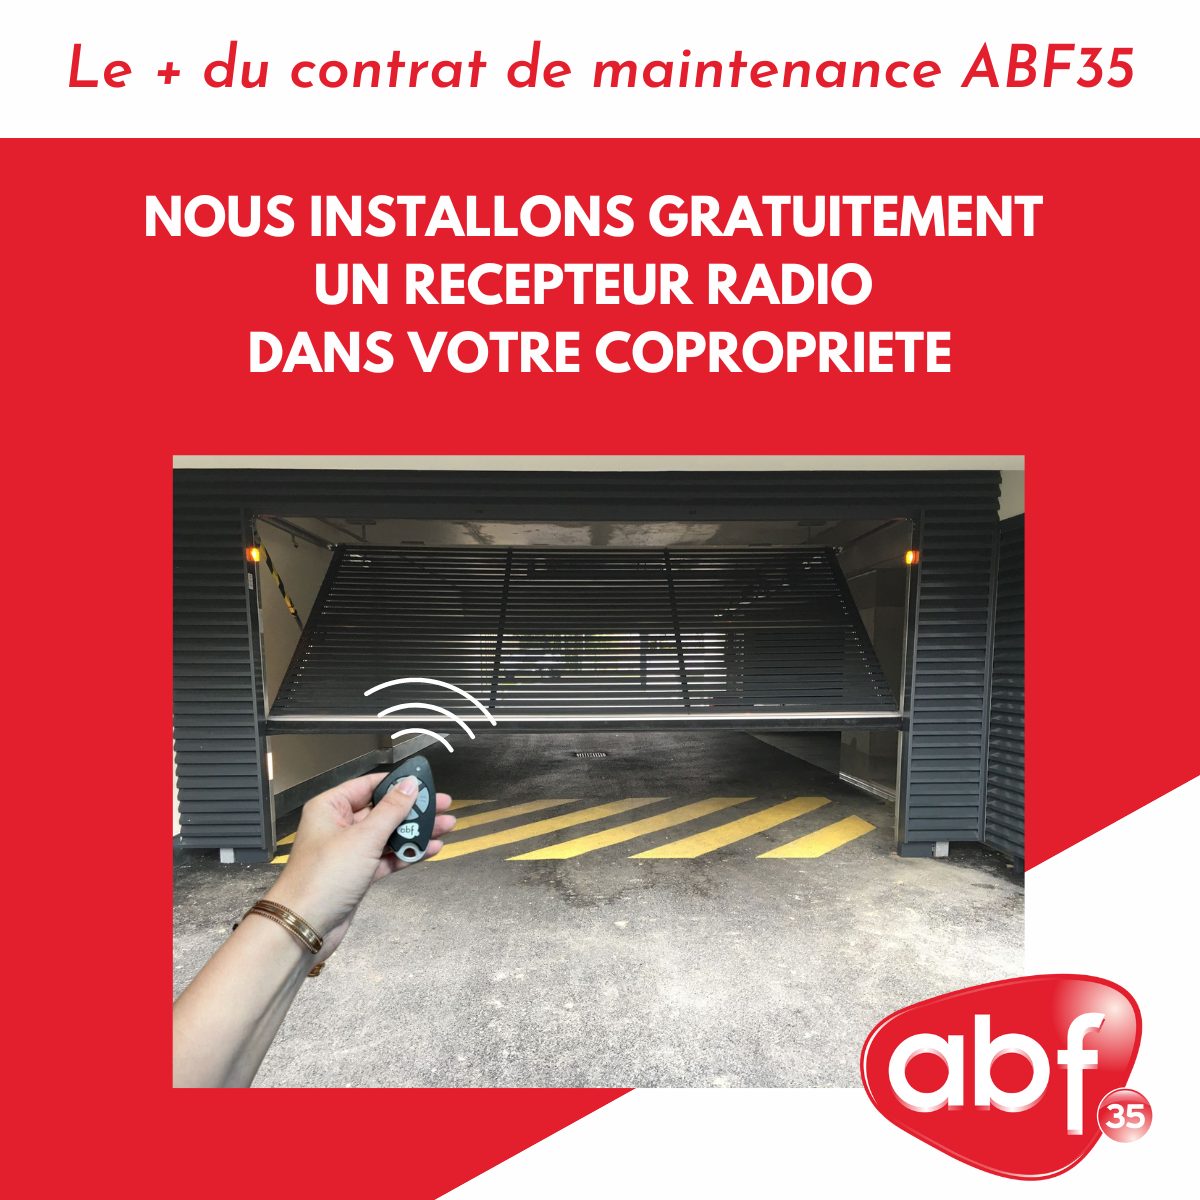 You are currently viewing [SERVICE] Le + du contrat de maintenance ABF35